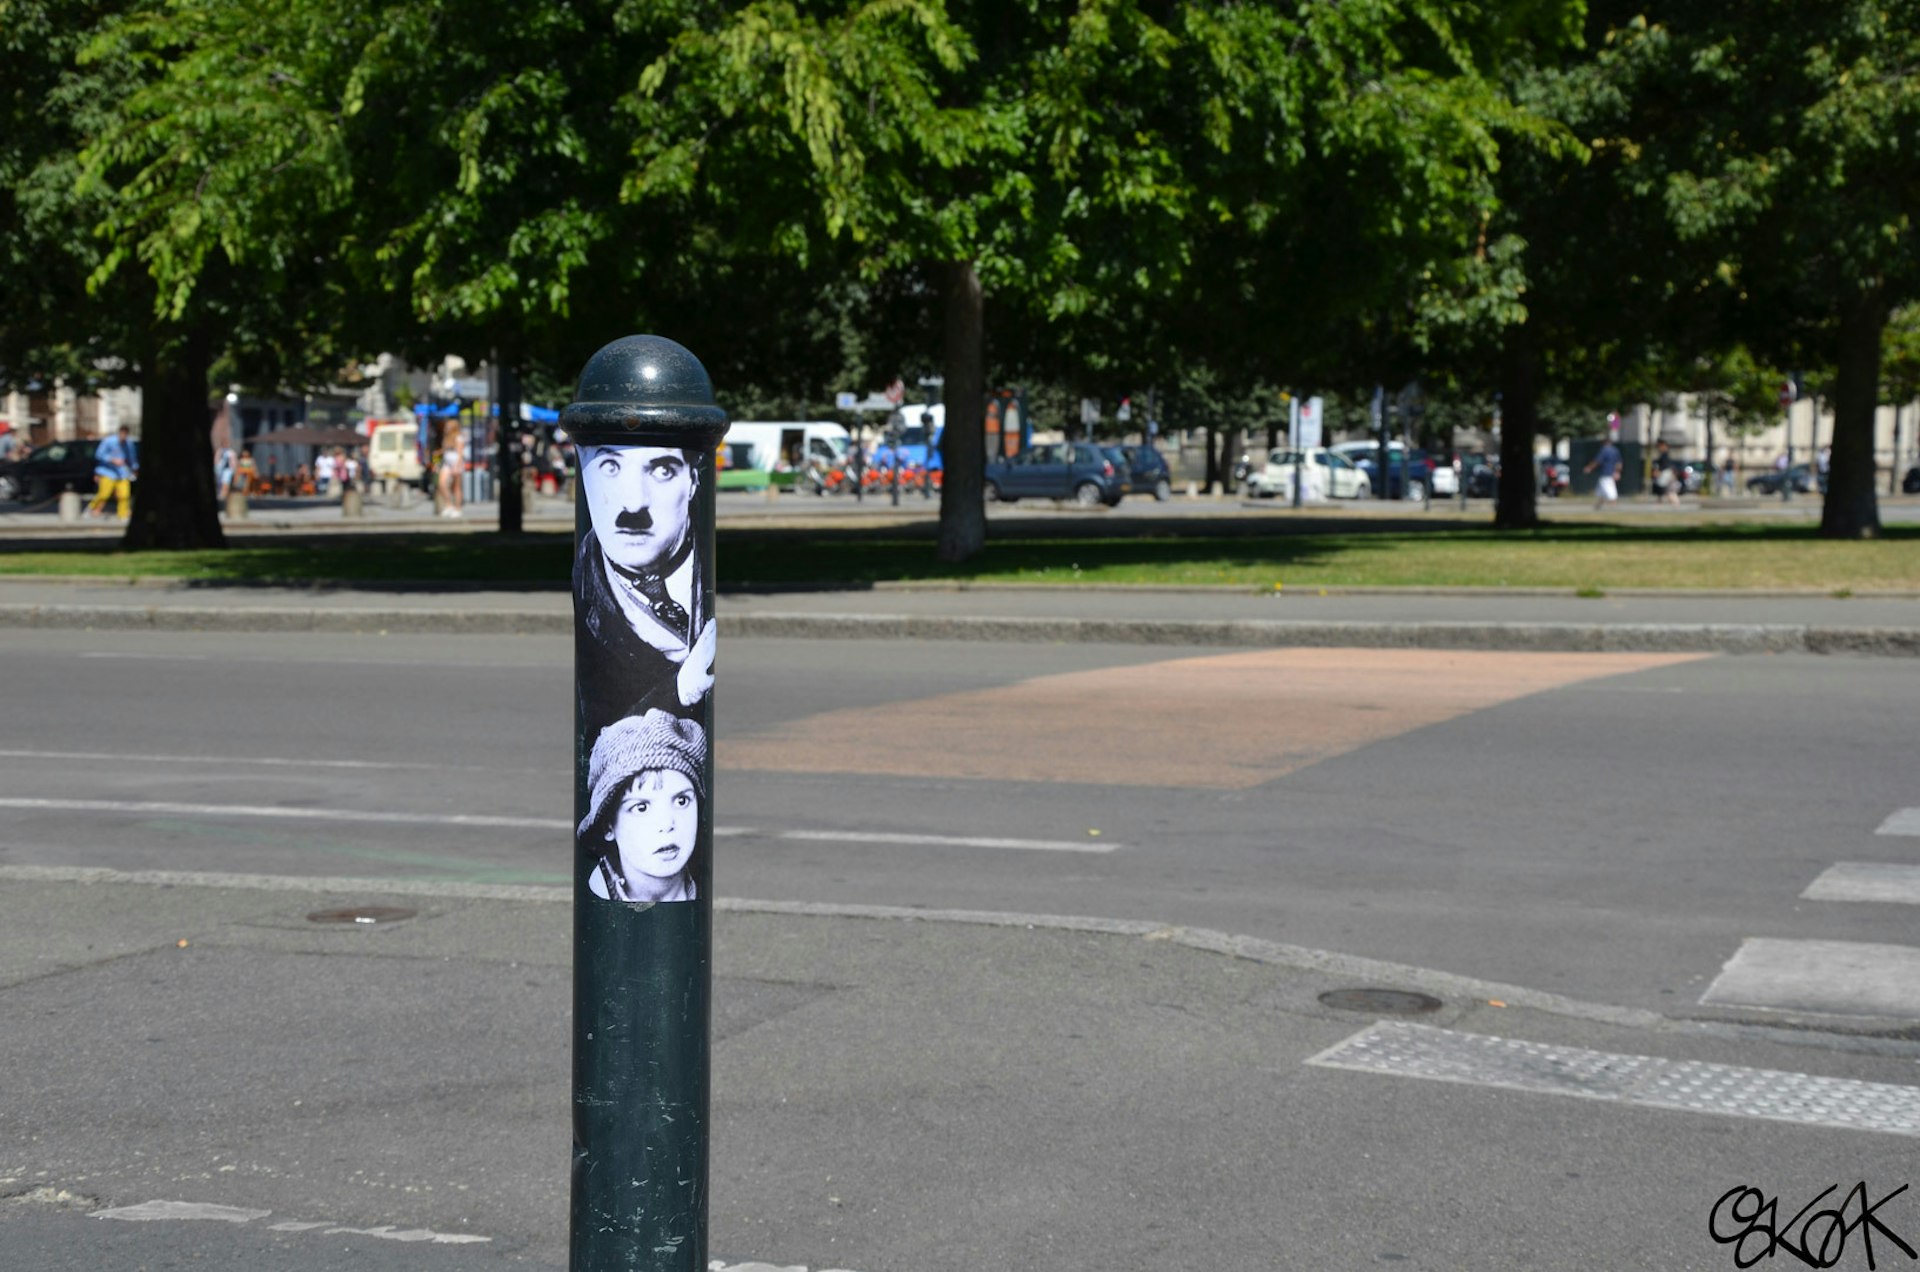 OaKoAK: the smartest street artist on the block